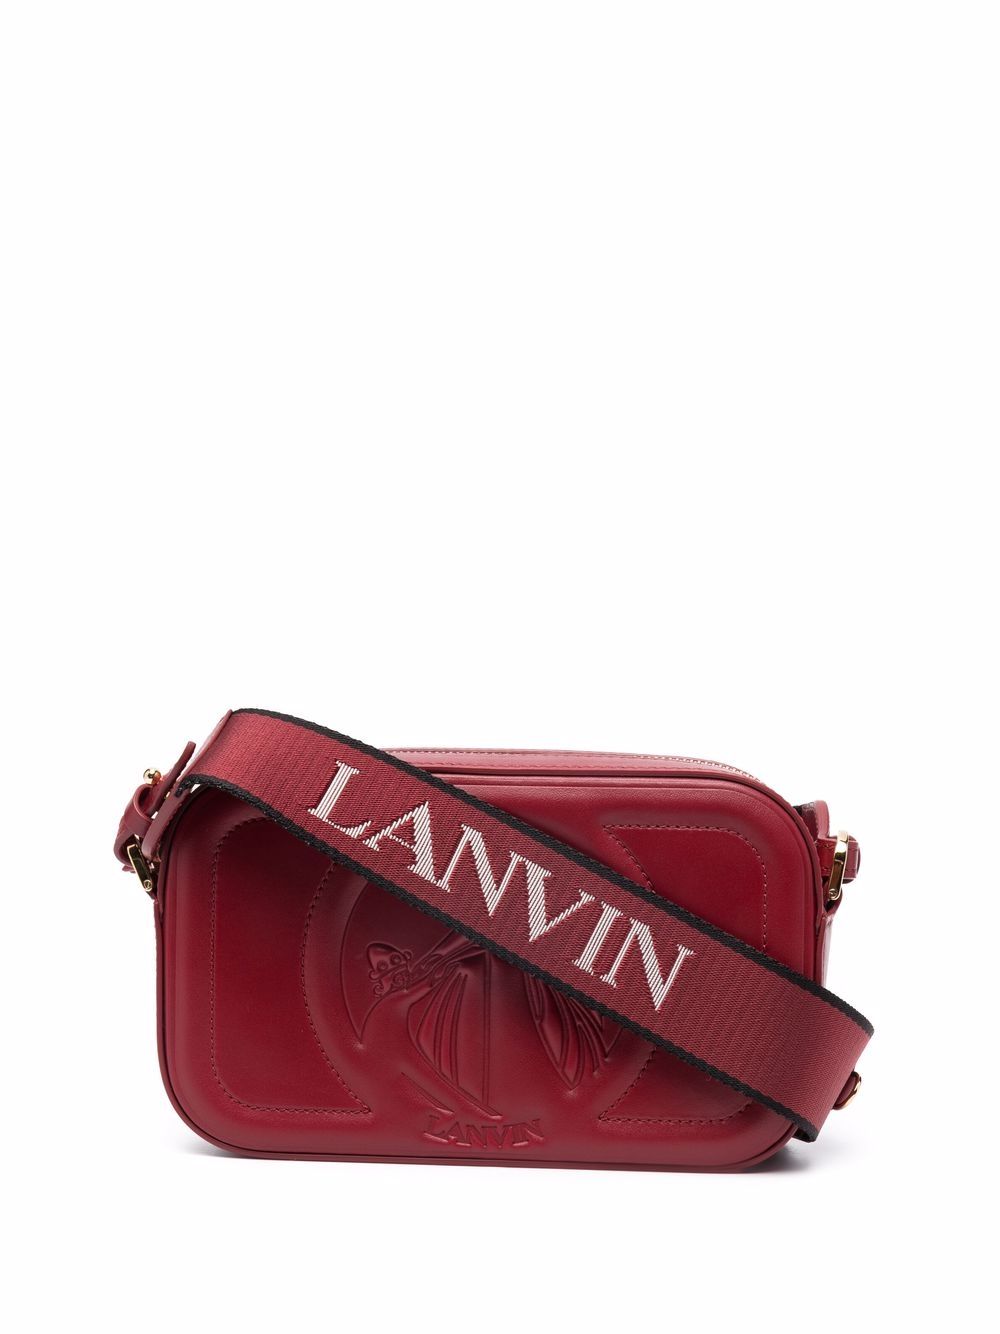 lanvin包包价格及图片图片